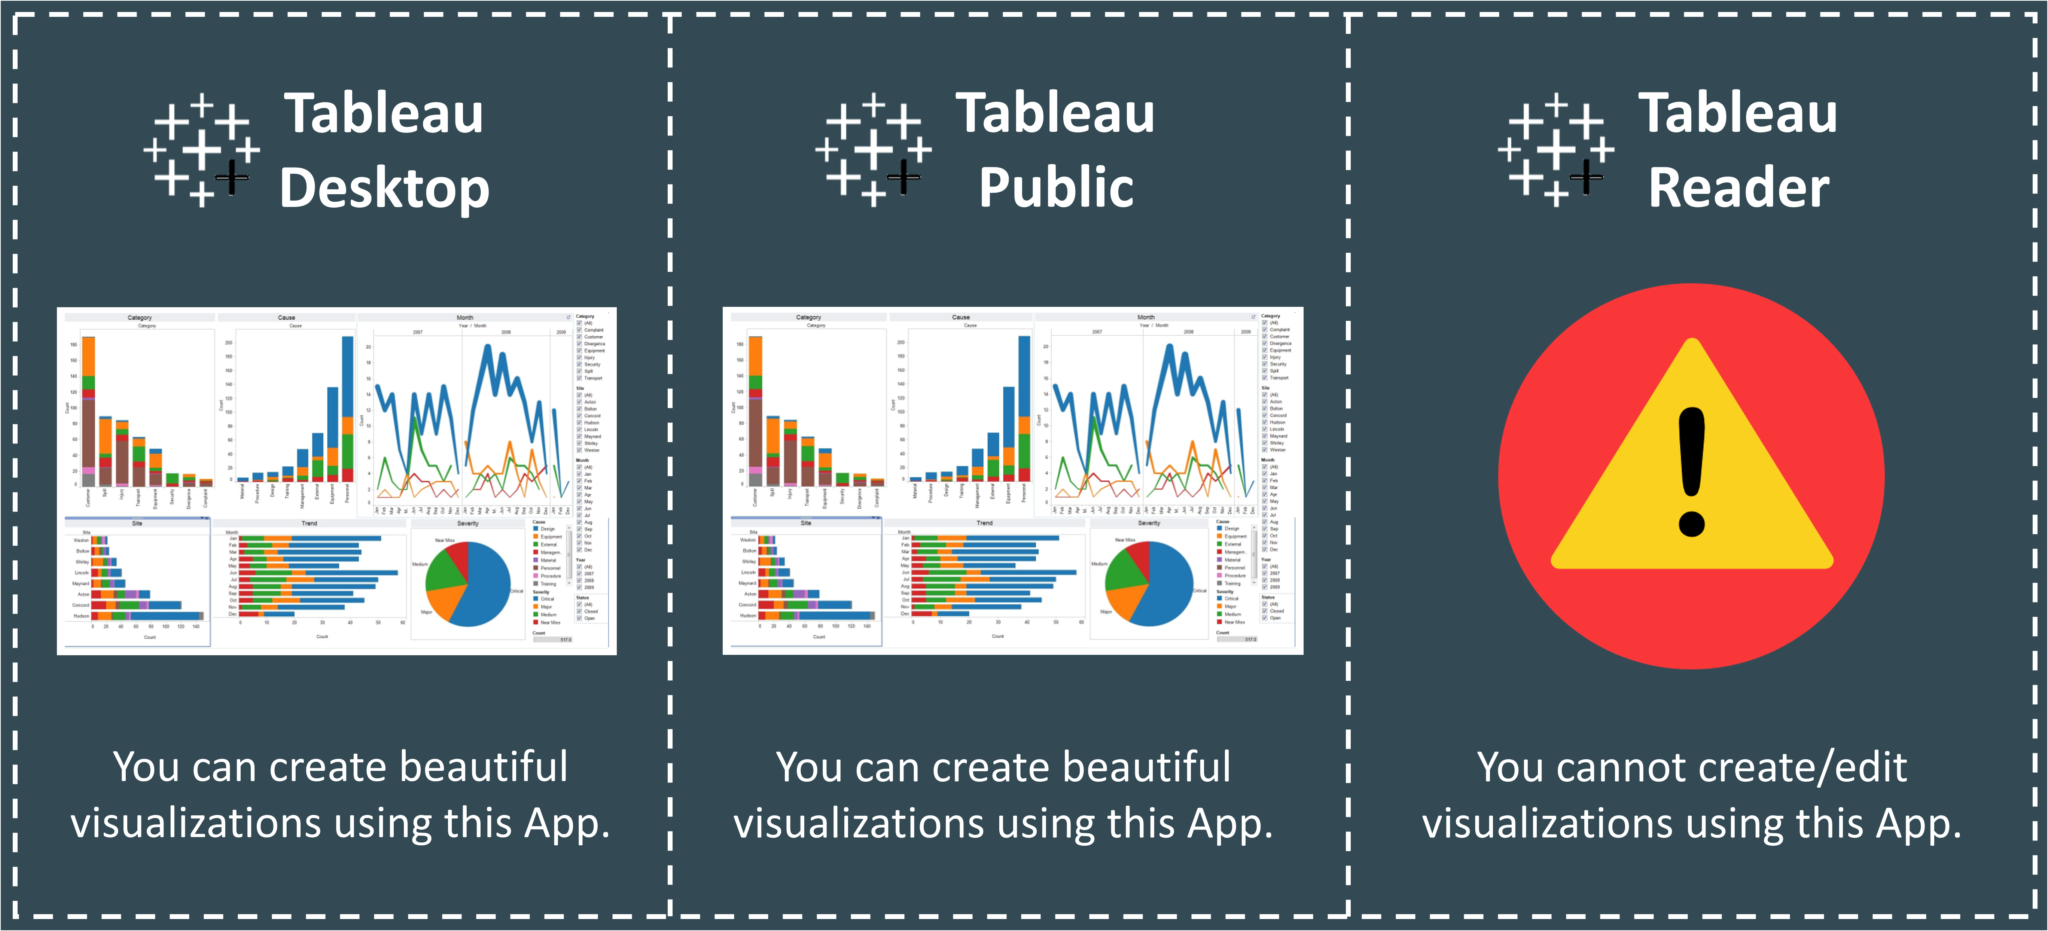 Visualization - Tableau Desktop vs Tableau Public vs Tableau Reader - Edureka